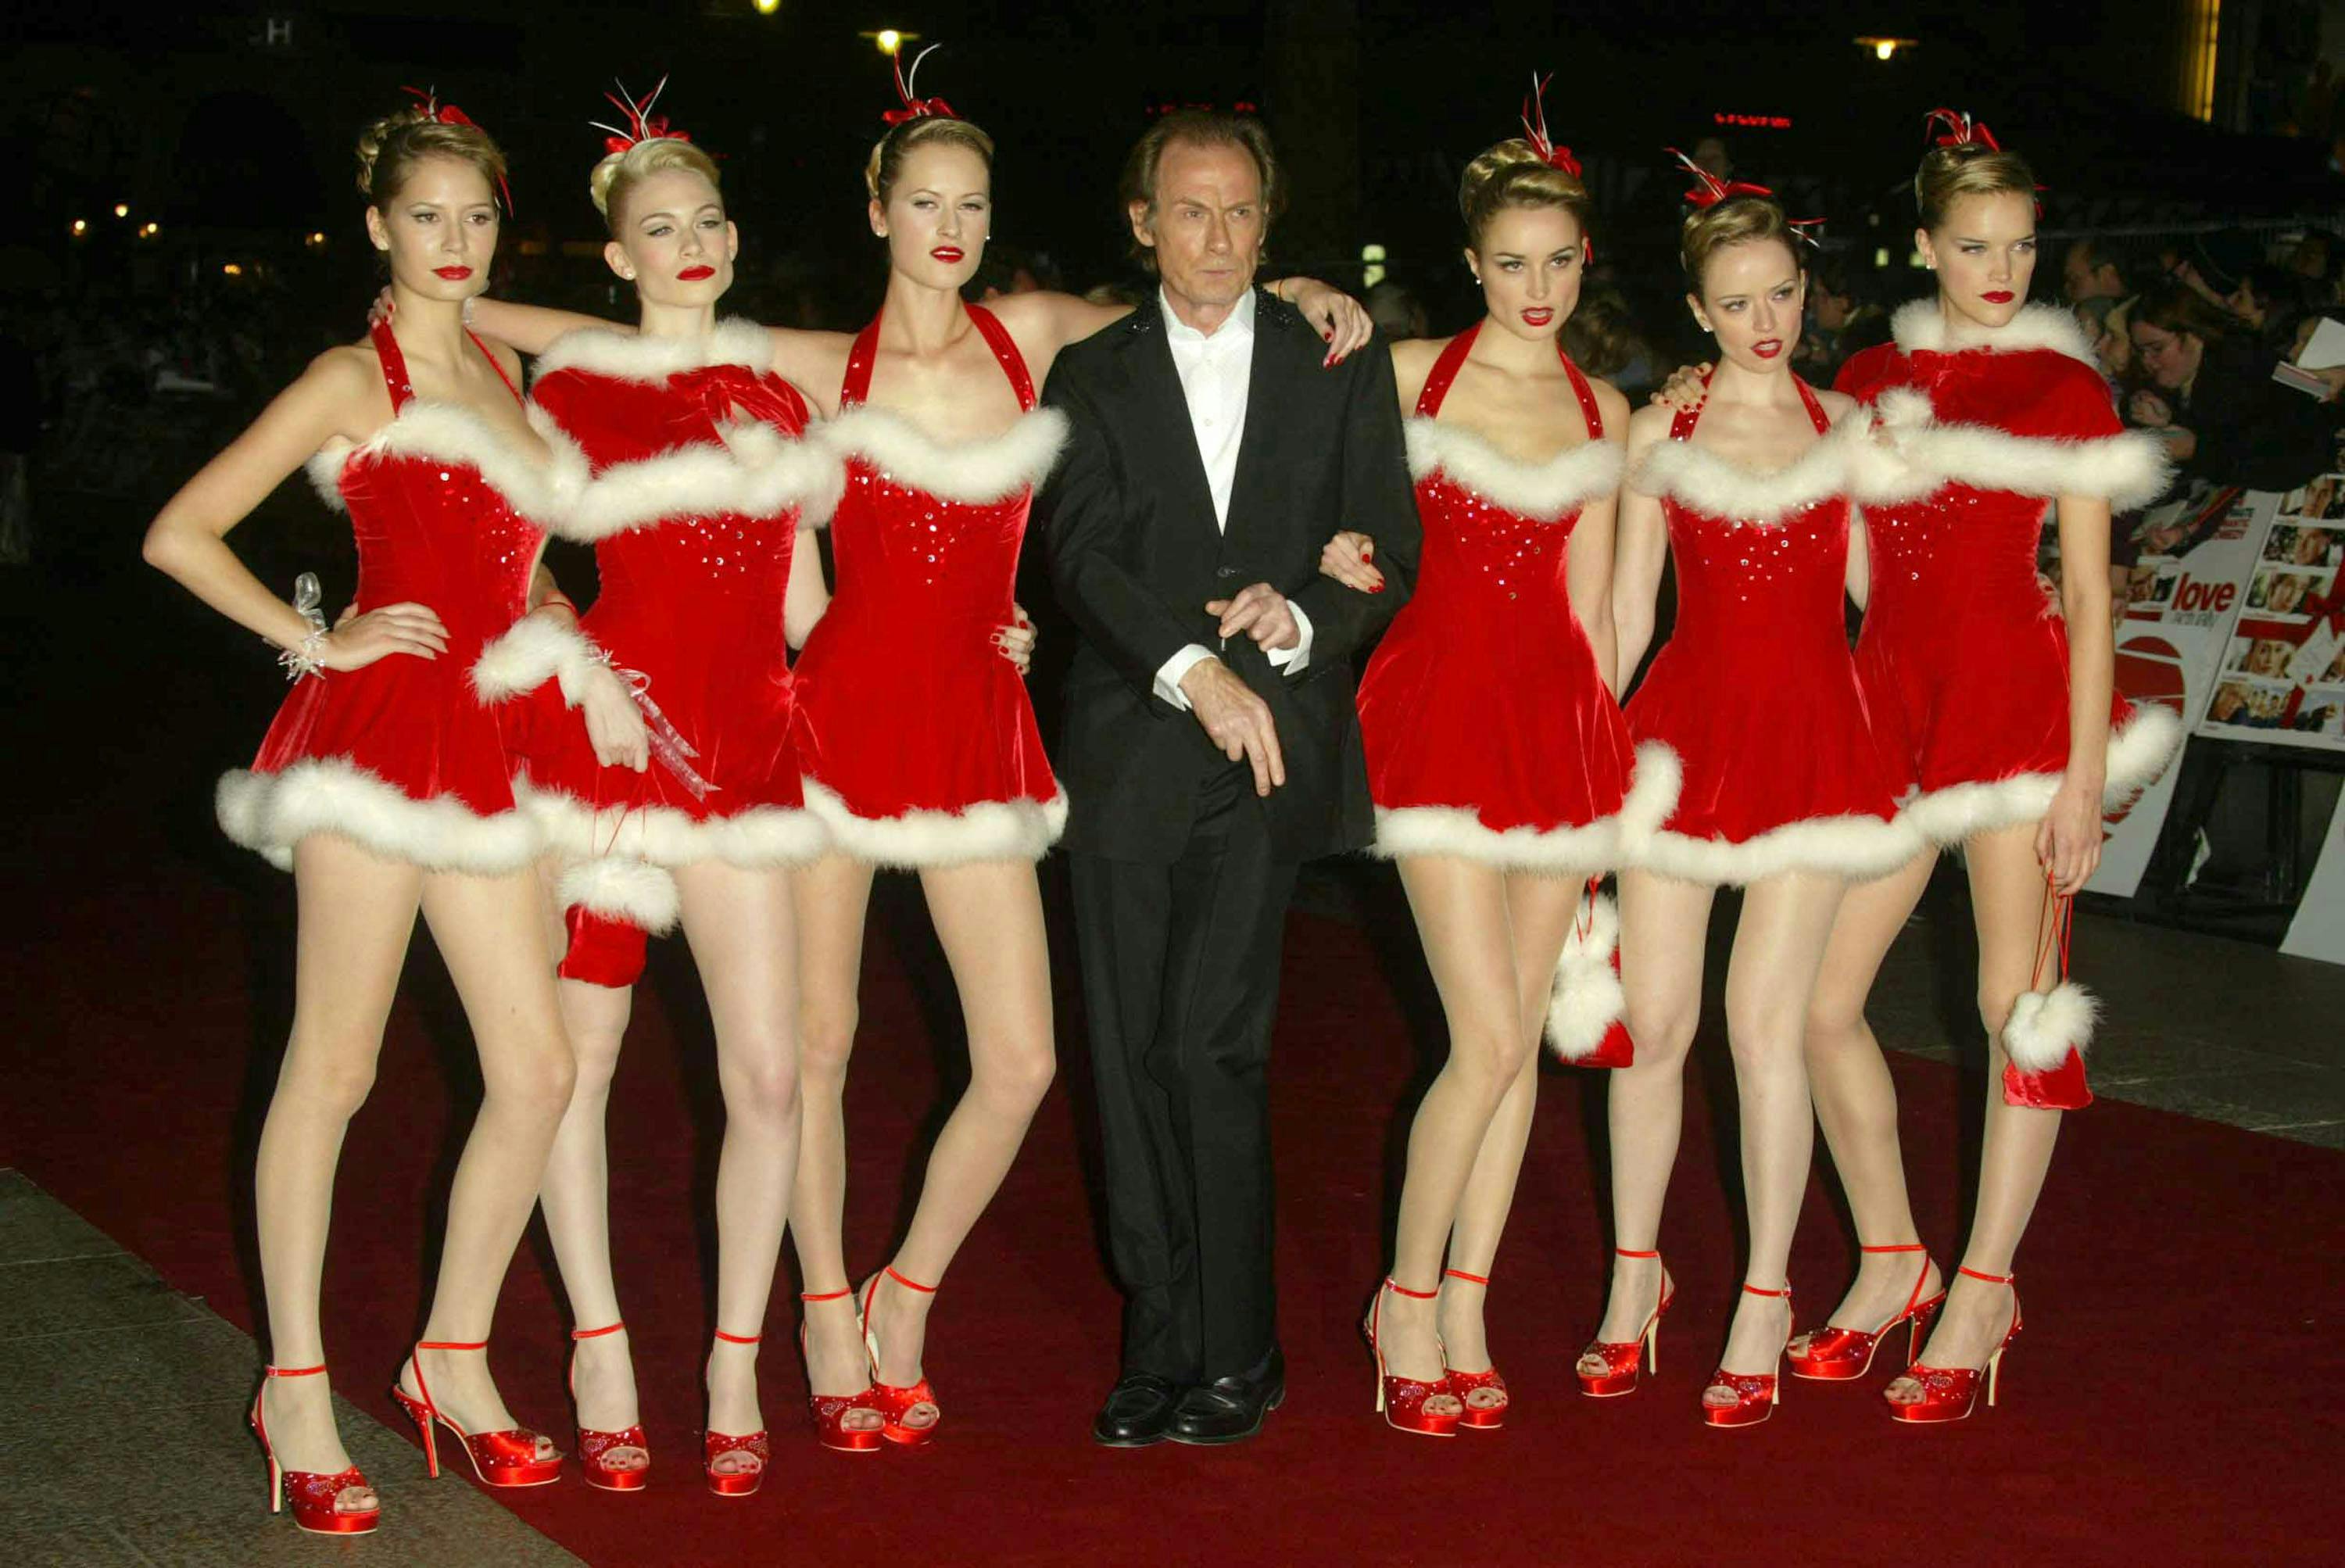 Bill Nighy will 6 dancers dressed in red Santa dresses